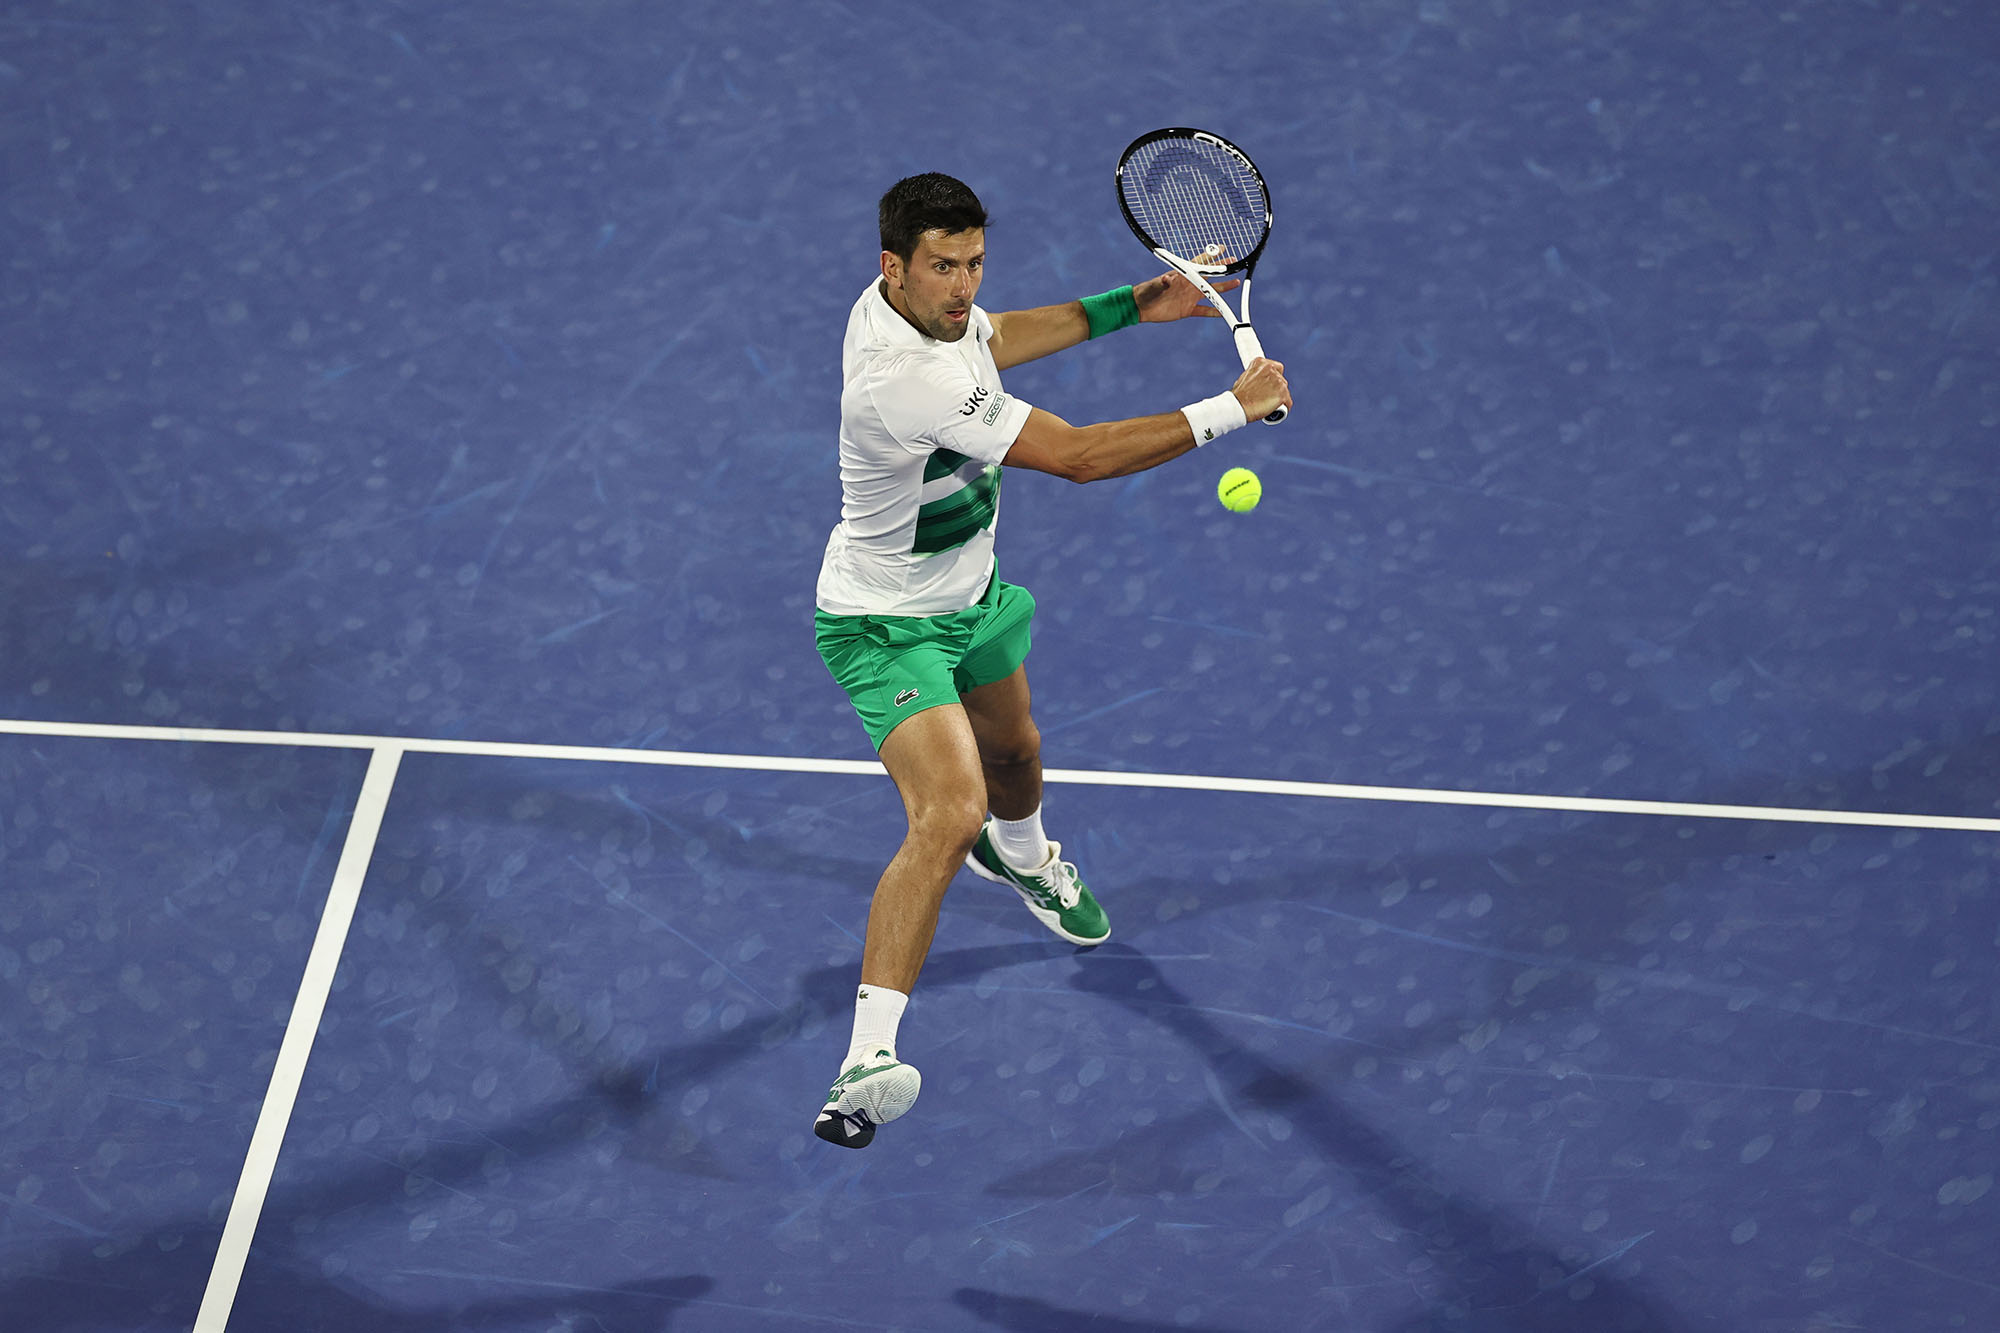 Novak Djokovic wins at Dubai in 2022 debut